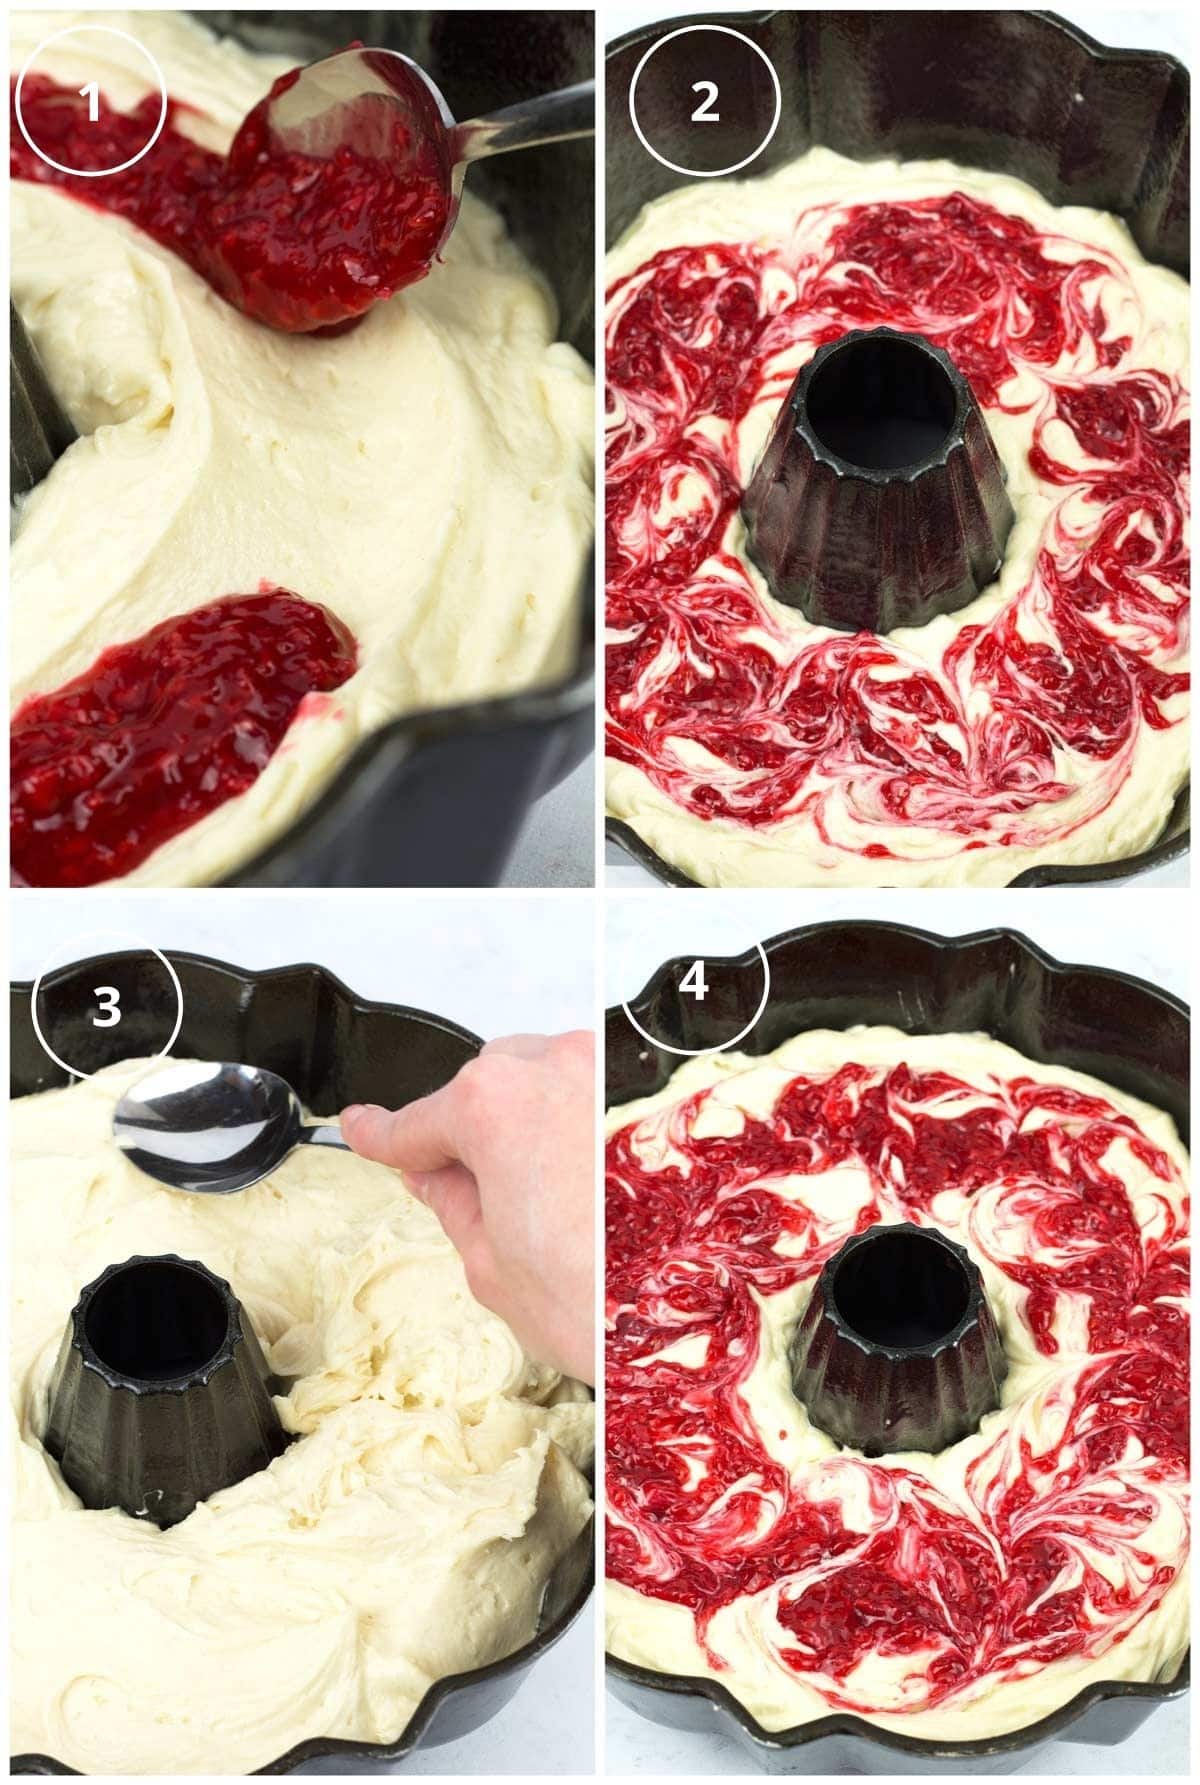 Process for swirling raspberry filling into the bundt cake batter.